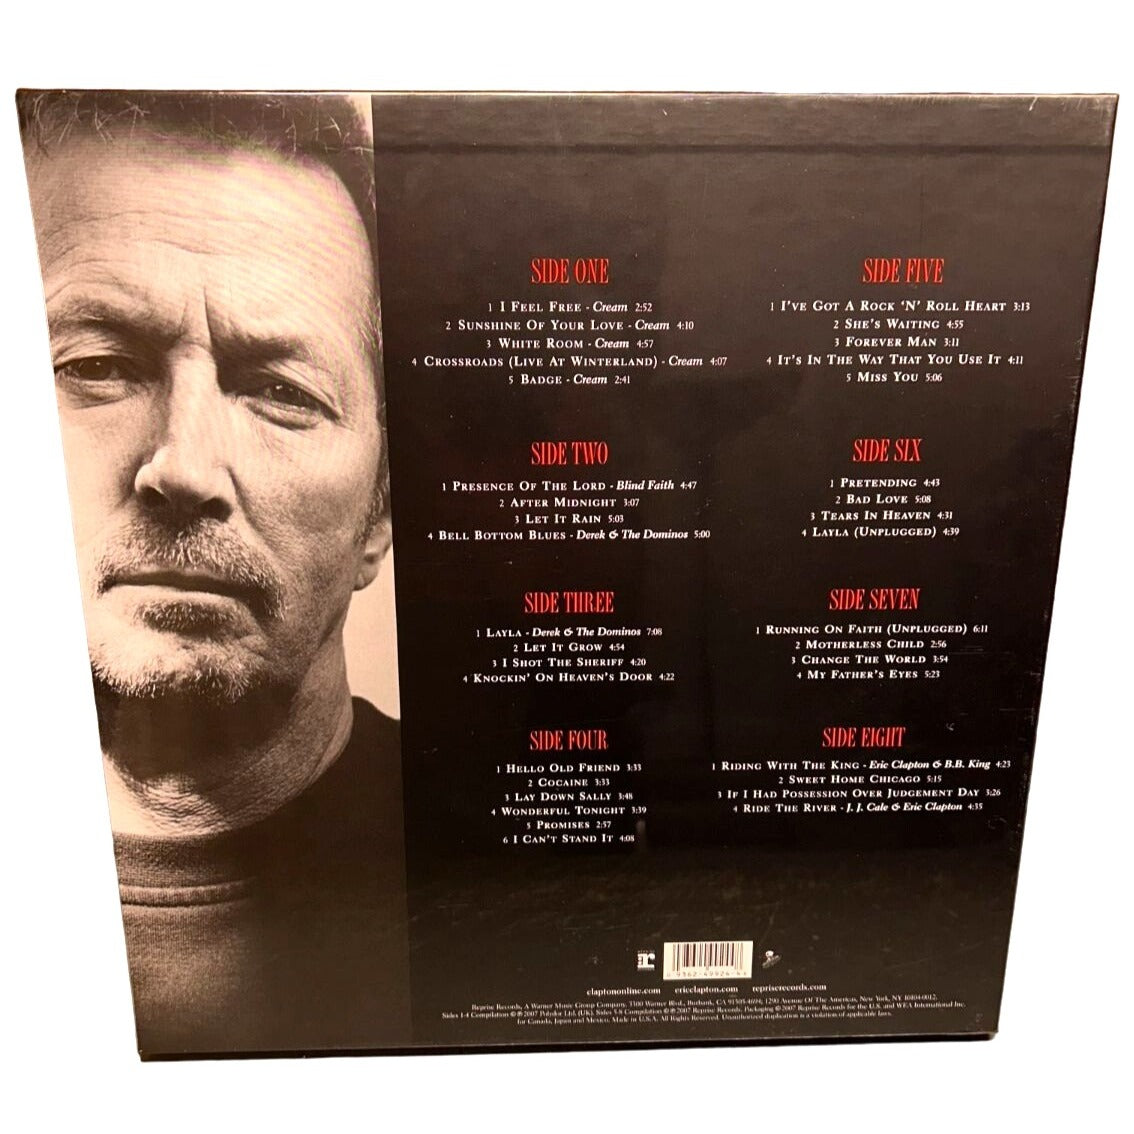 Eric Clapton - Complete Clapton - Vinyl 4-LP 36 Songs 1968-2006 BRAND NEW SEALED